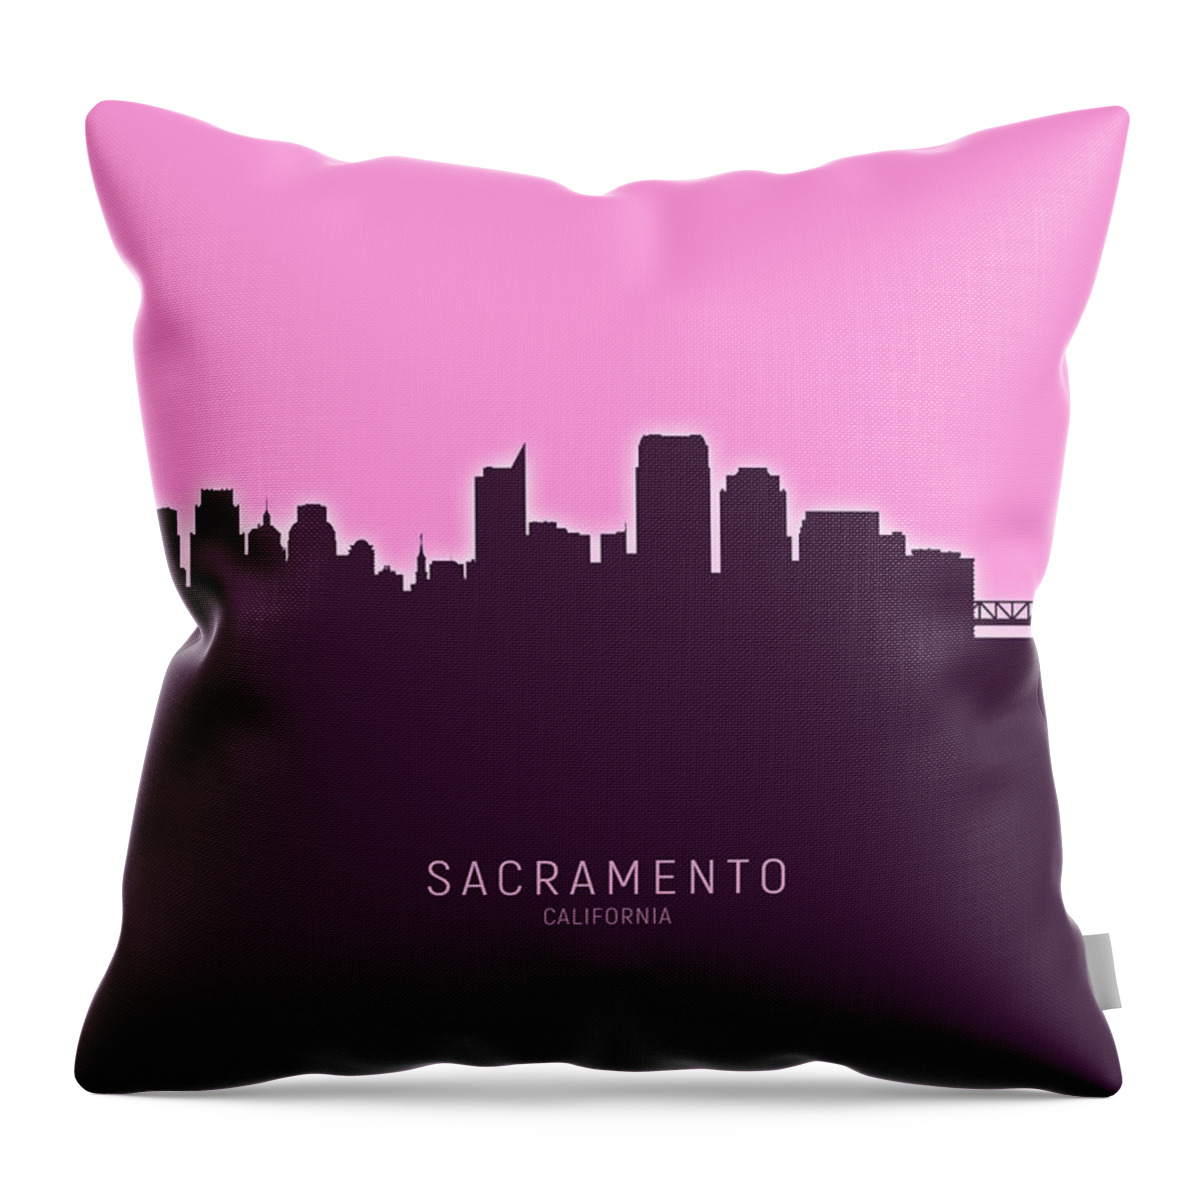 Sacramento Throw Pillow featuring the digital art Sacramento California Skyline #25 by Michael Tompsett